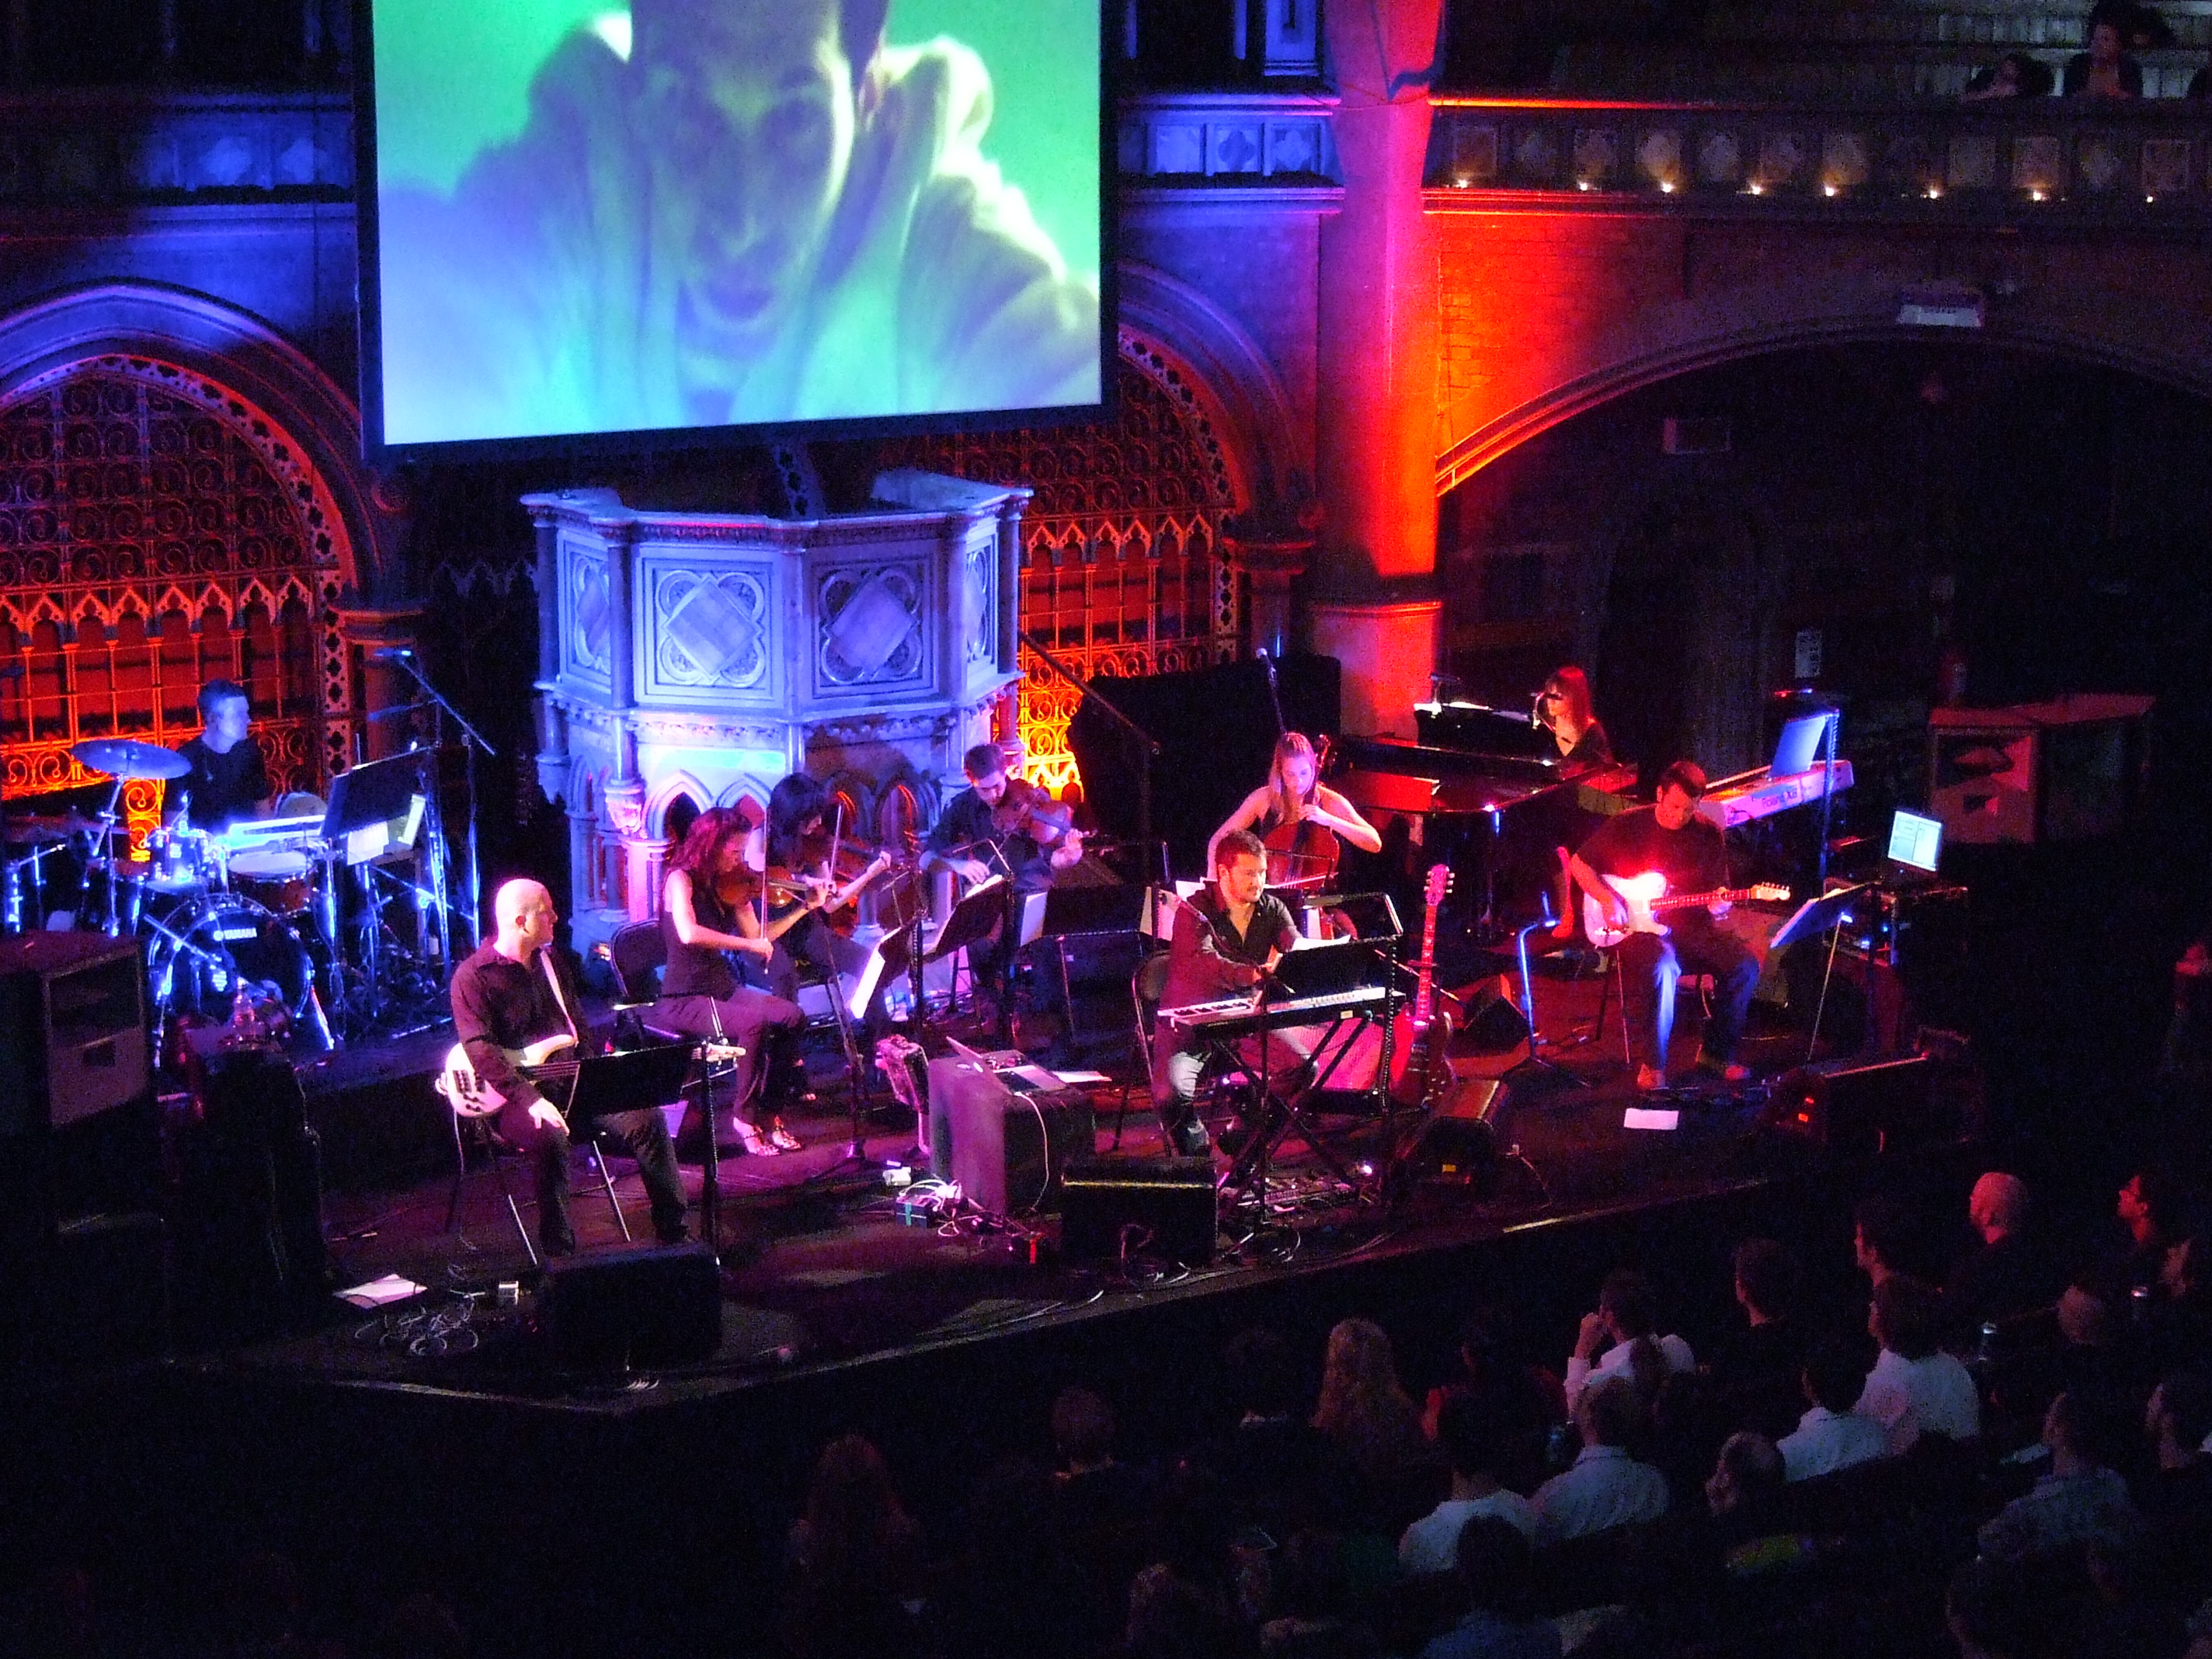 Performing piano alongside Clint Mansell and Sonus Quartet, Union Chapel London 2009